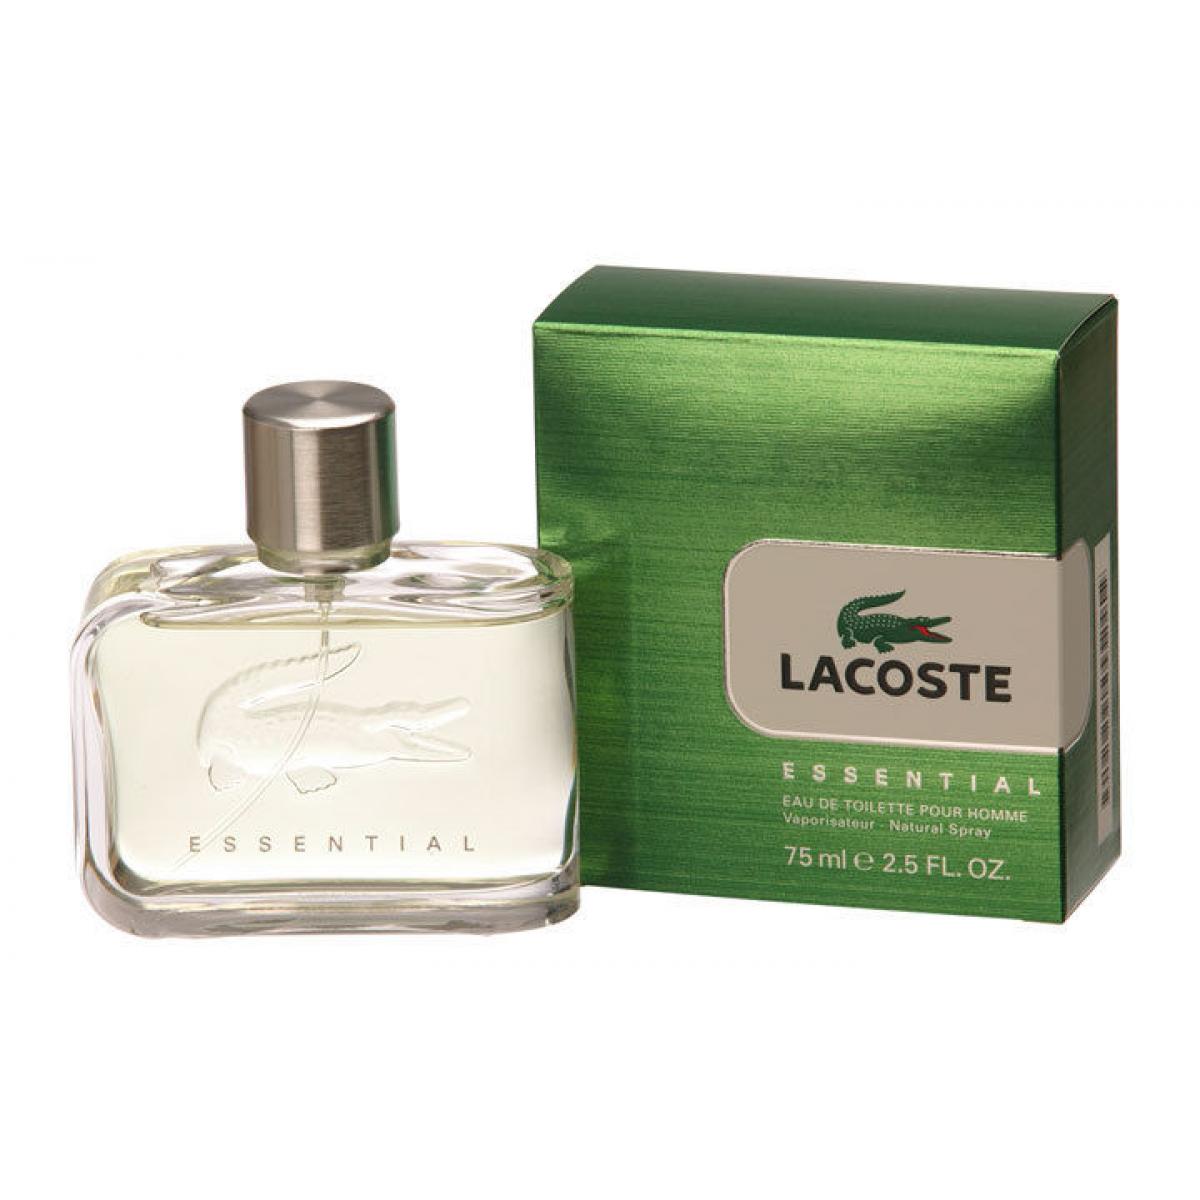 Купить мужа цена. Lacoste Essential EDT, 125 ml. Lacoste Essential Eau de Toilette 125 ml. Lacoste Essential. EDT. Pour homme 125 ml.. Lacoste Essential for men.